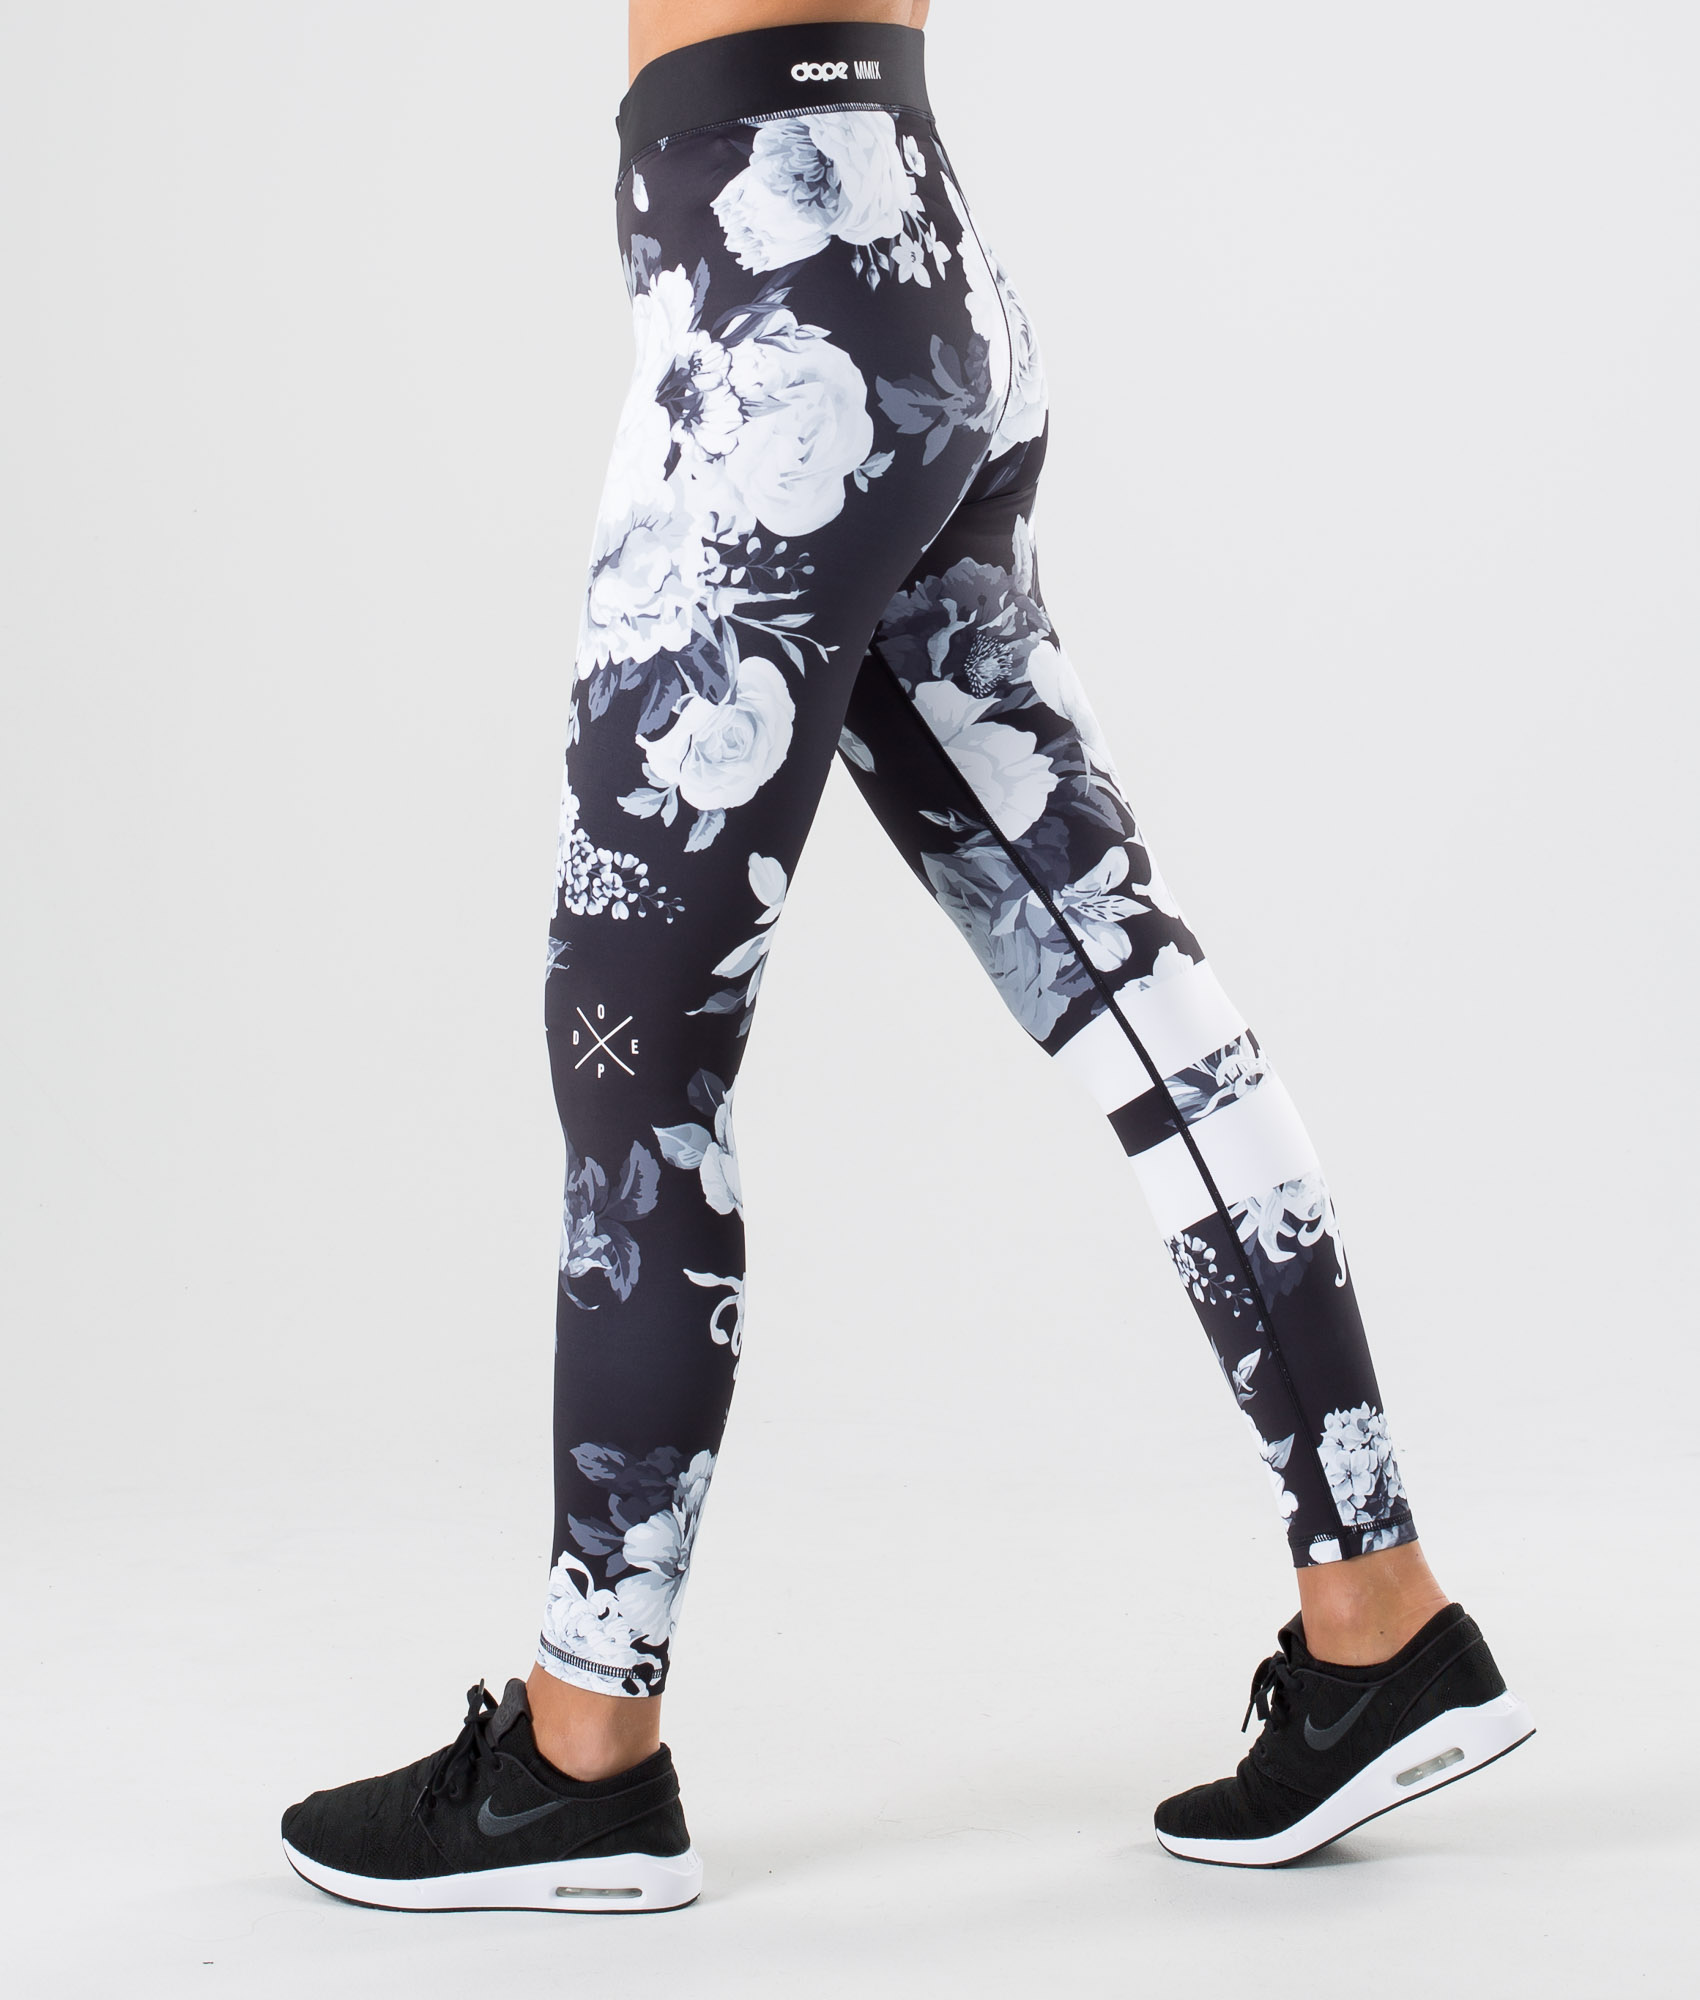 Women's Funky Black And White Flower Pattern Printed Leggings Pants One  Size | eBay